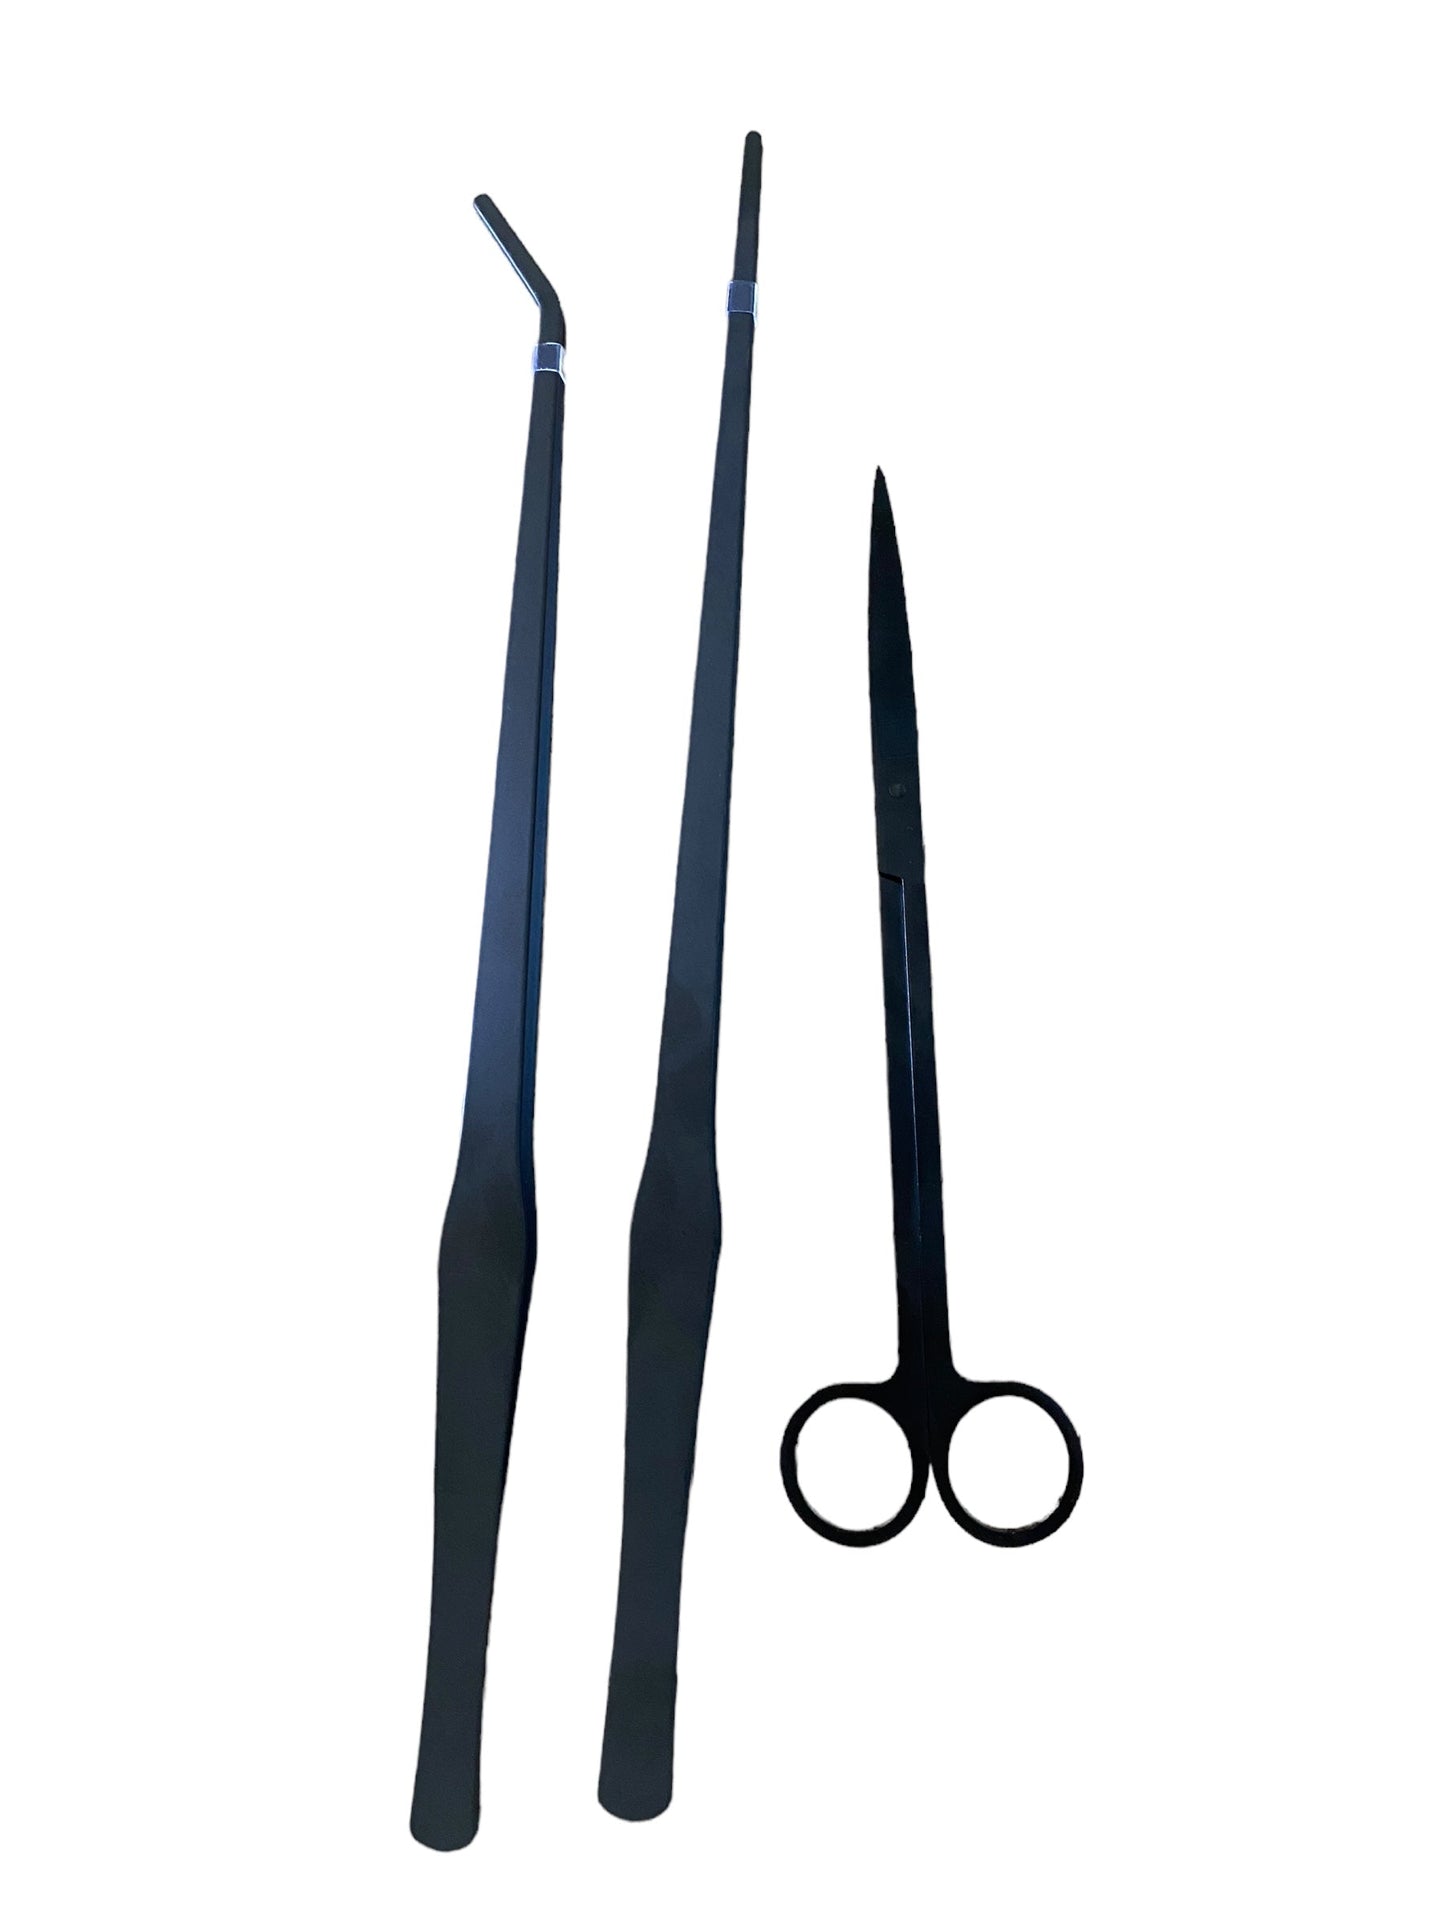 Terrarium tweezer combo - 38cm + 48cm bended & straight + scissors